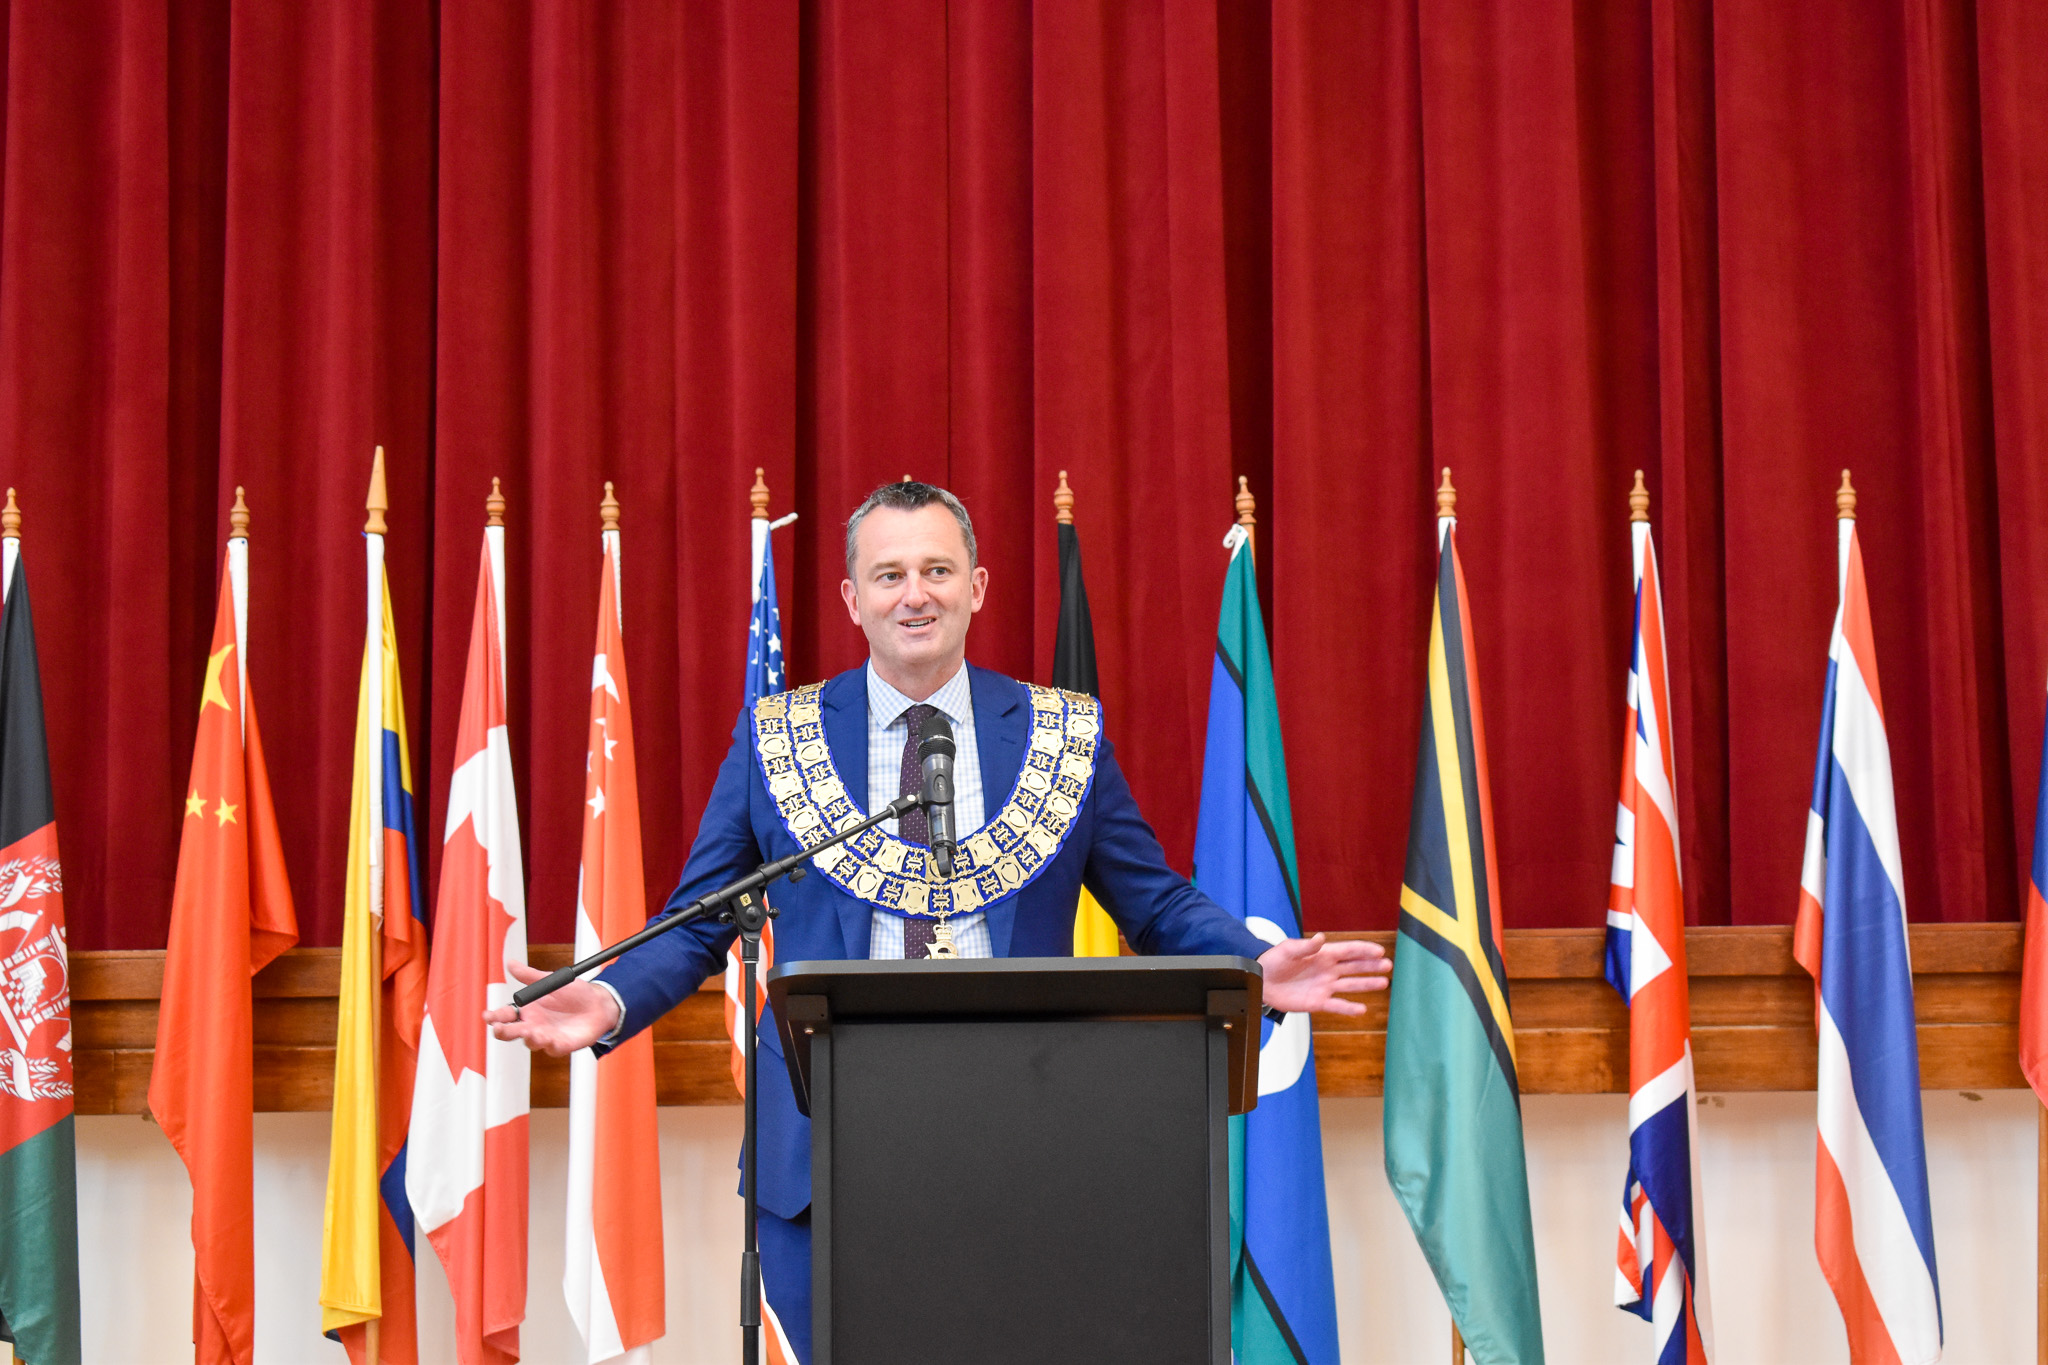 Mayor of Ballarat Cr Daniel Moloney speaking at Civic Hall